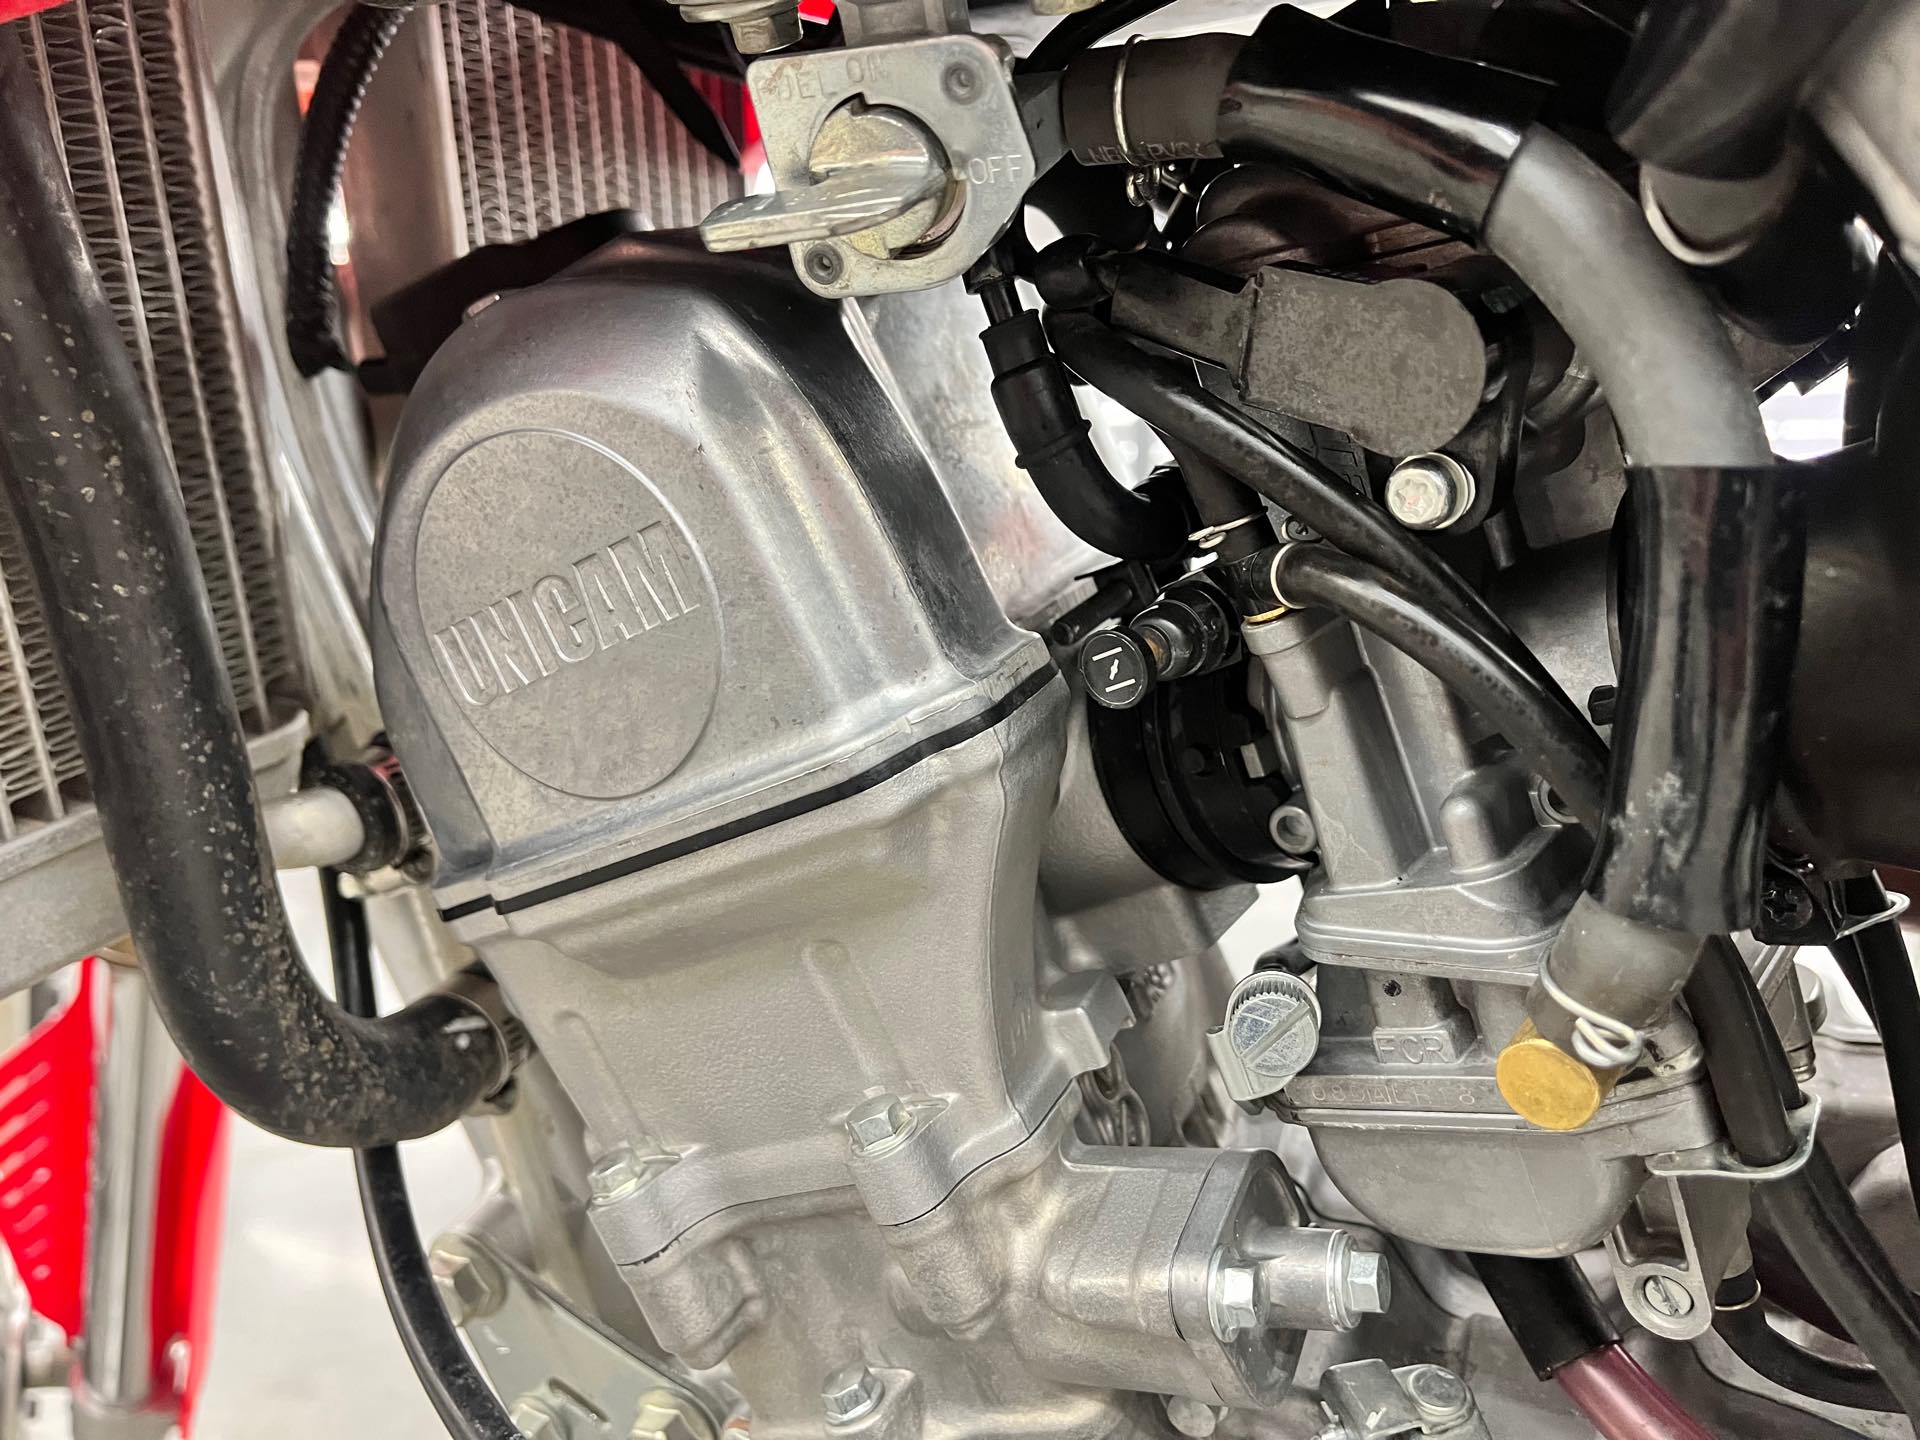 2022 Honda CRF 150R Expert at Aces Motorcycles - Denver